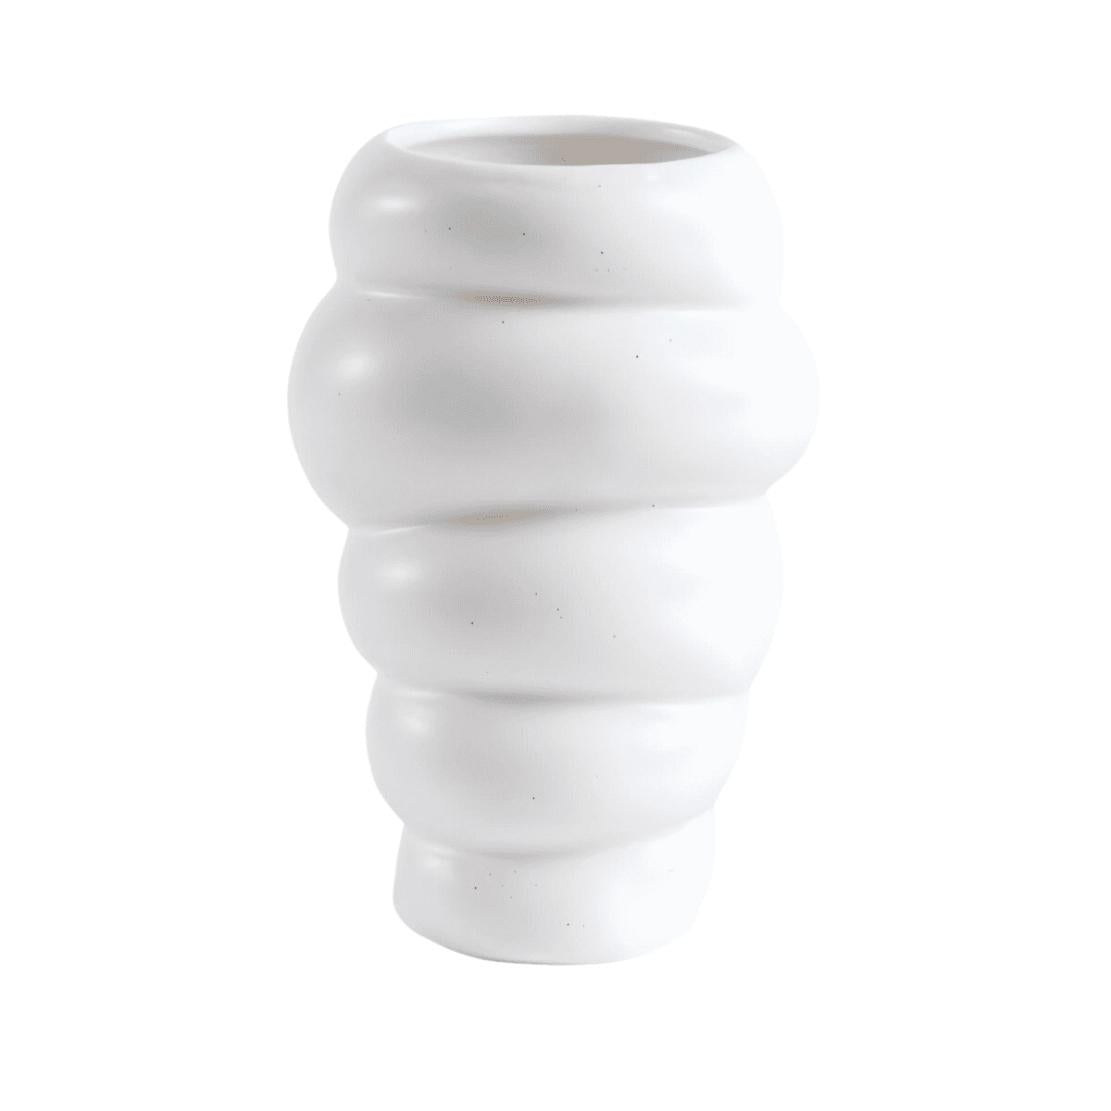 Tall, white ceramic honeycomb vase